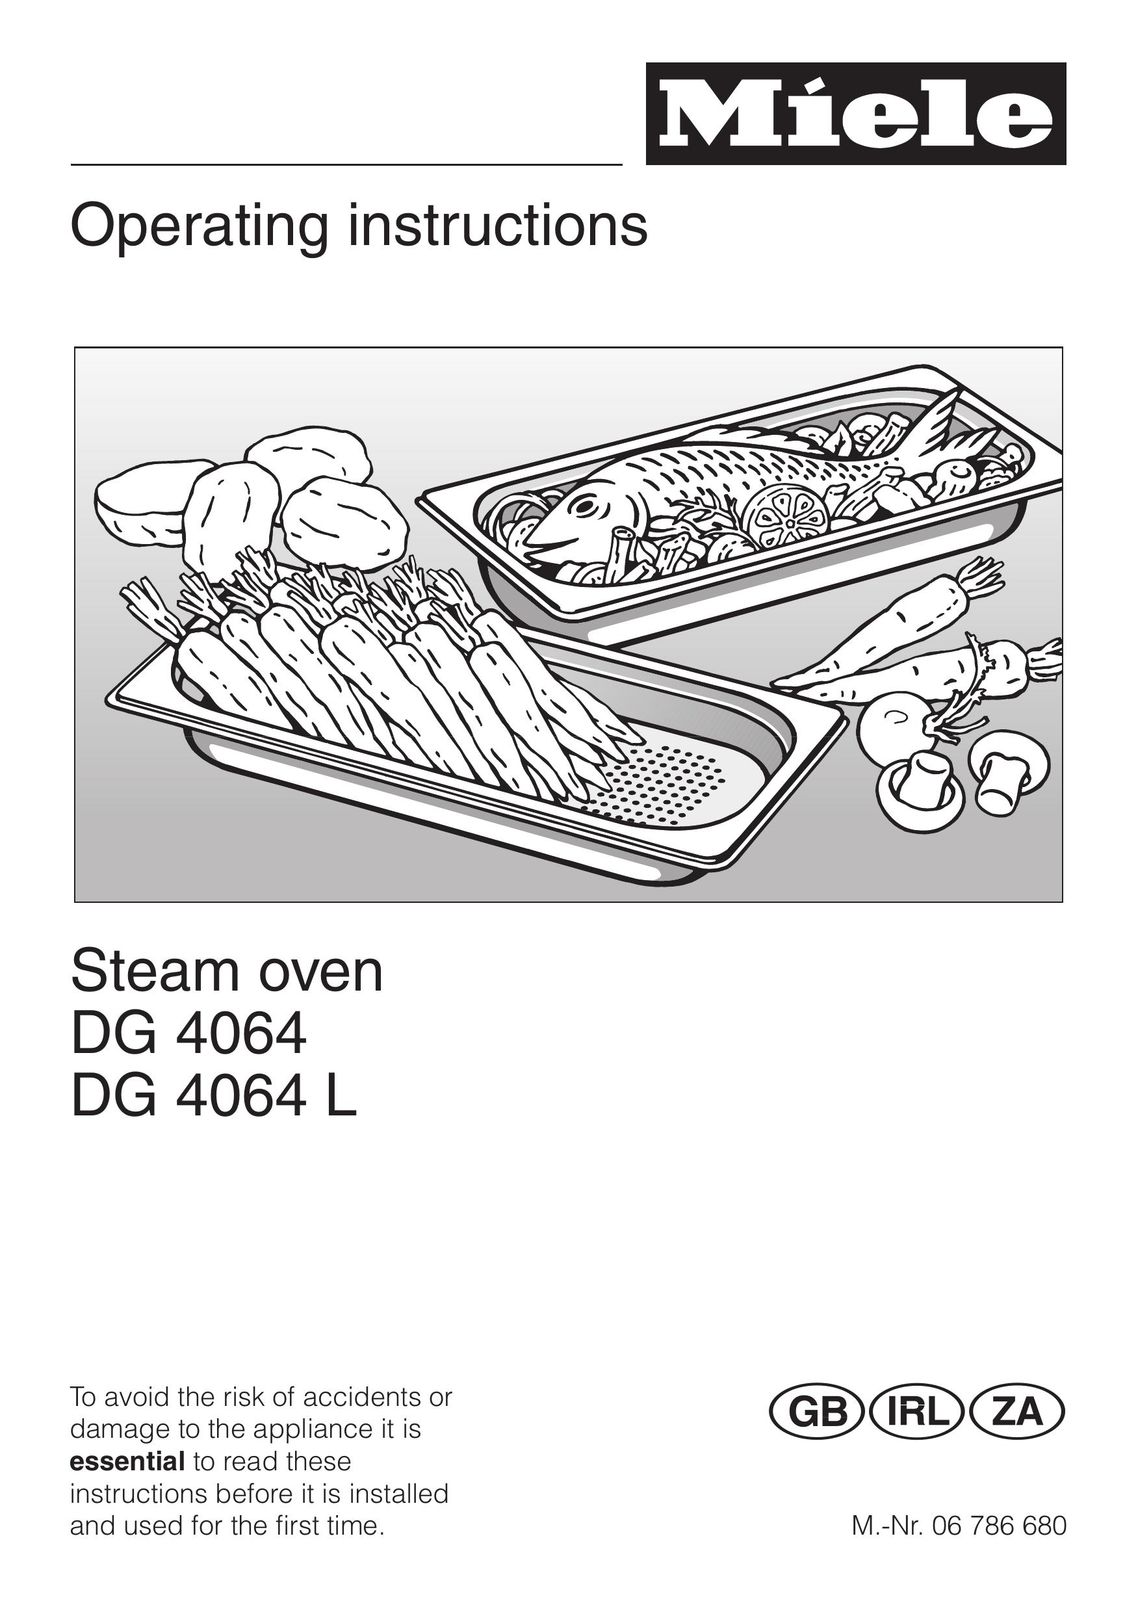 Miele DG 4064 Oven User Manual